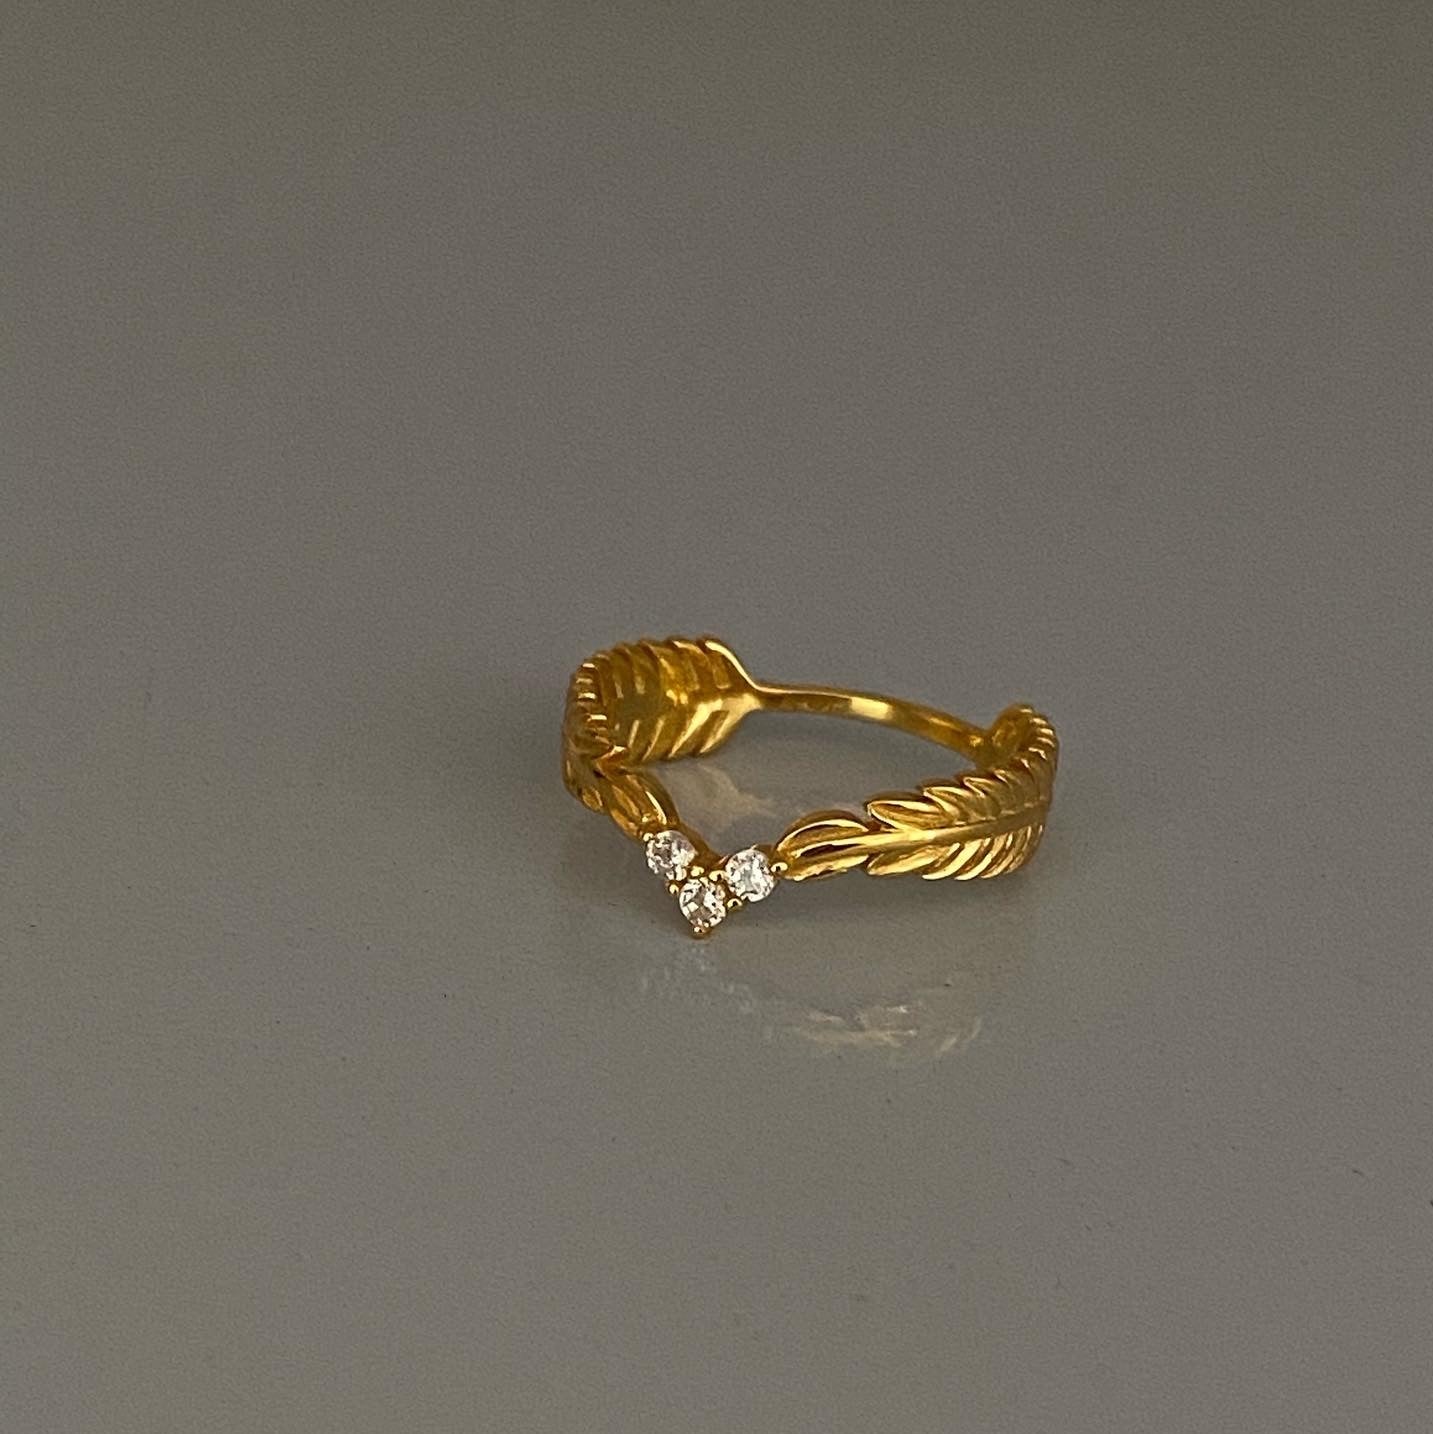 Meideya jewelry gold leaf and diamond ring